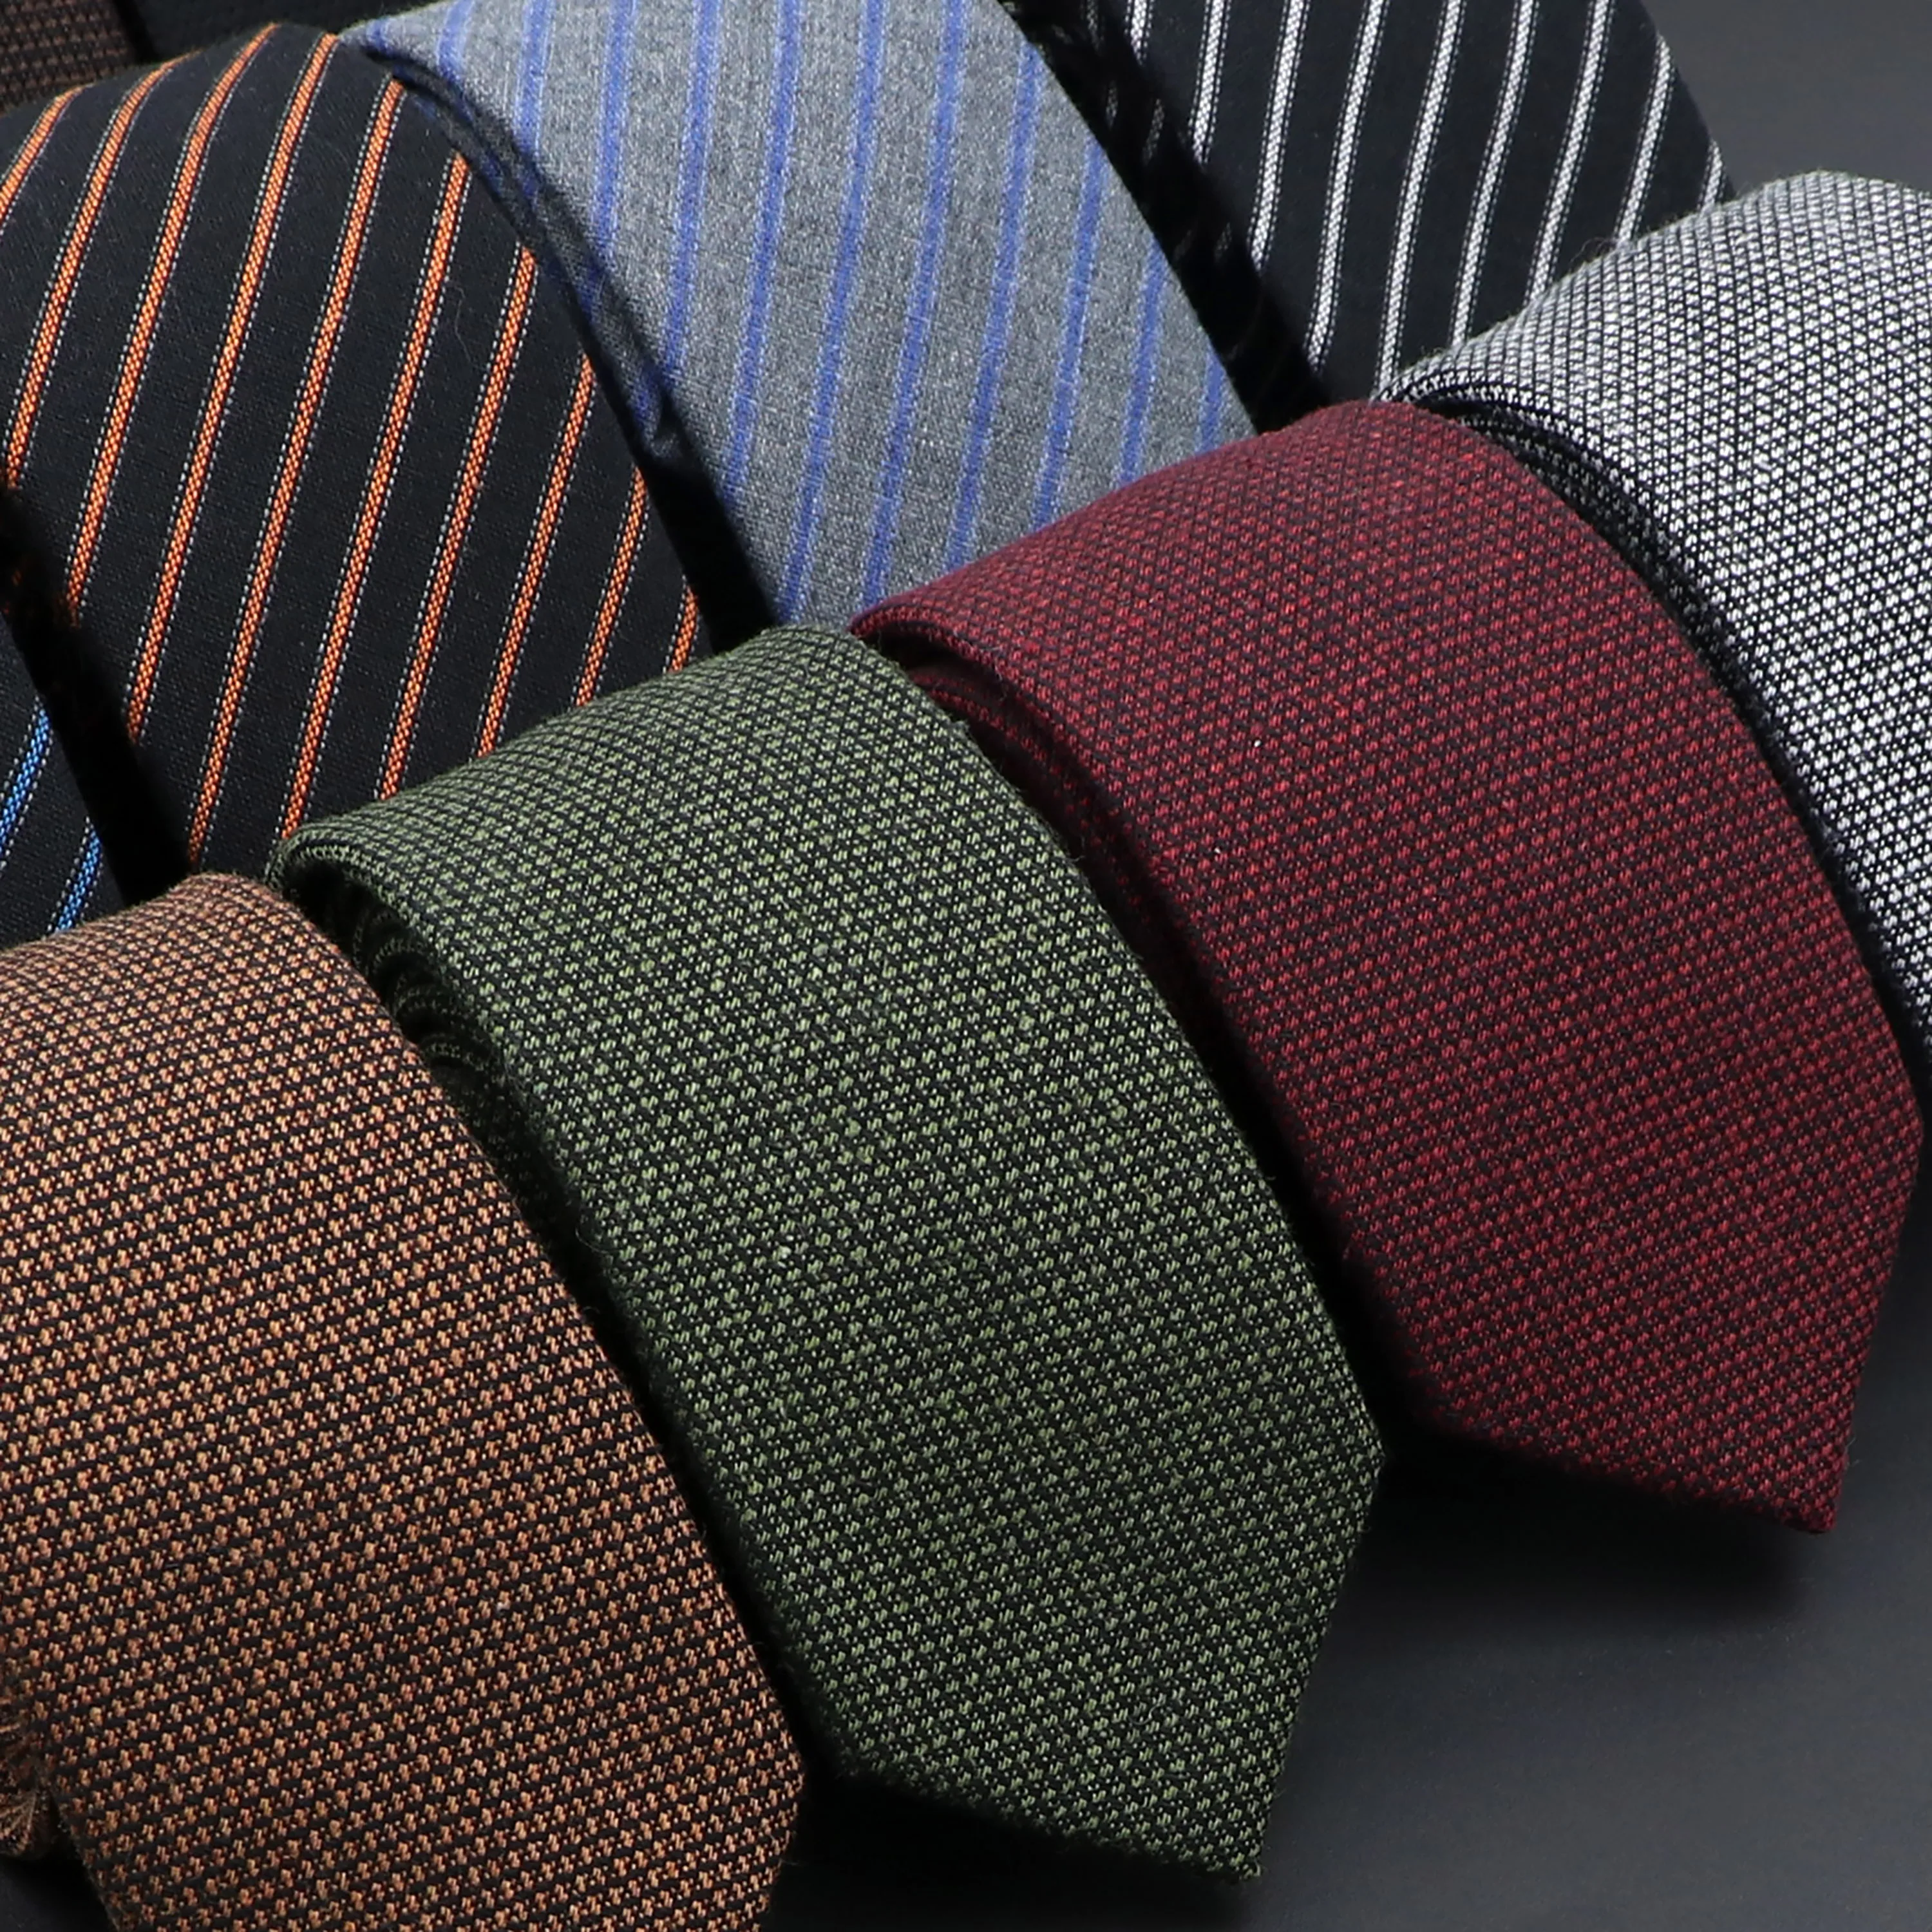 Corbatas de lana hechas a mano para hombre, corbatas de cuello estrecho a rayas de Cachemira, accesorios informales de alta calidad